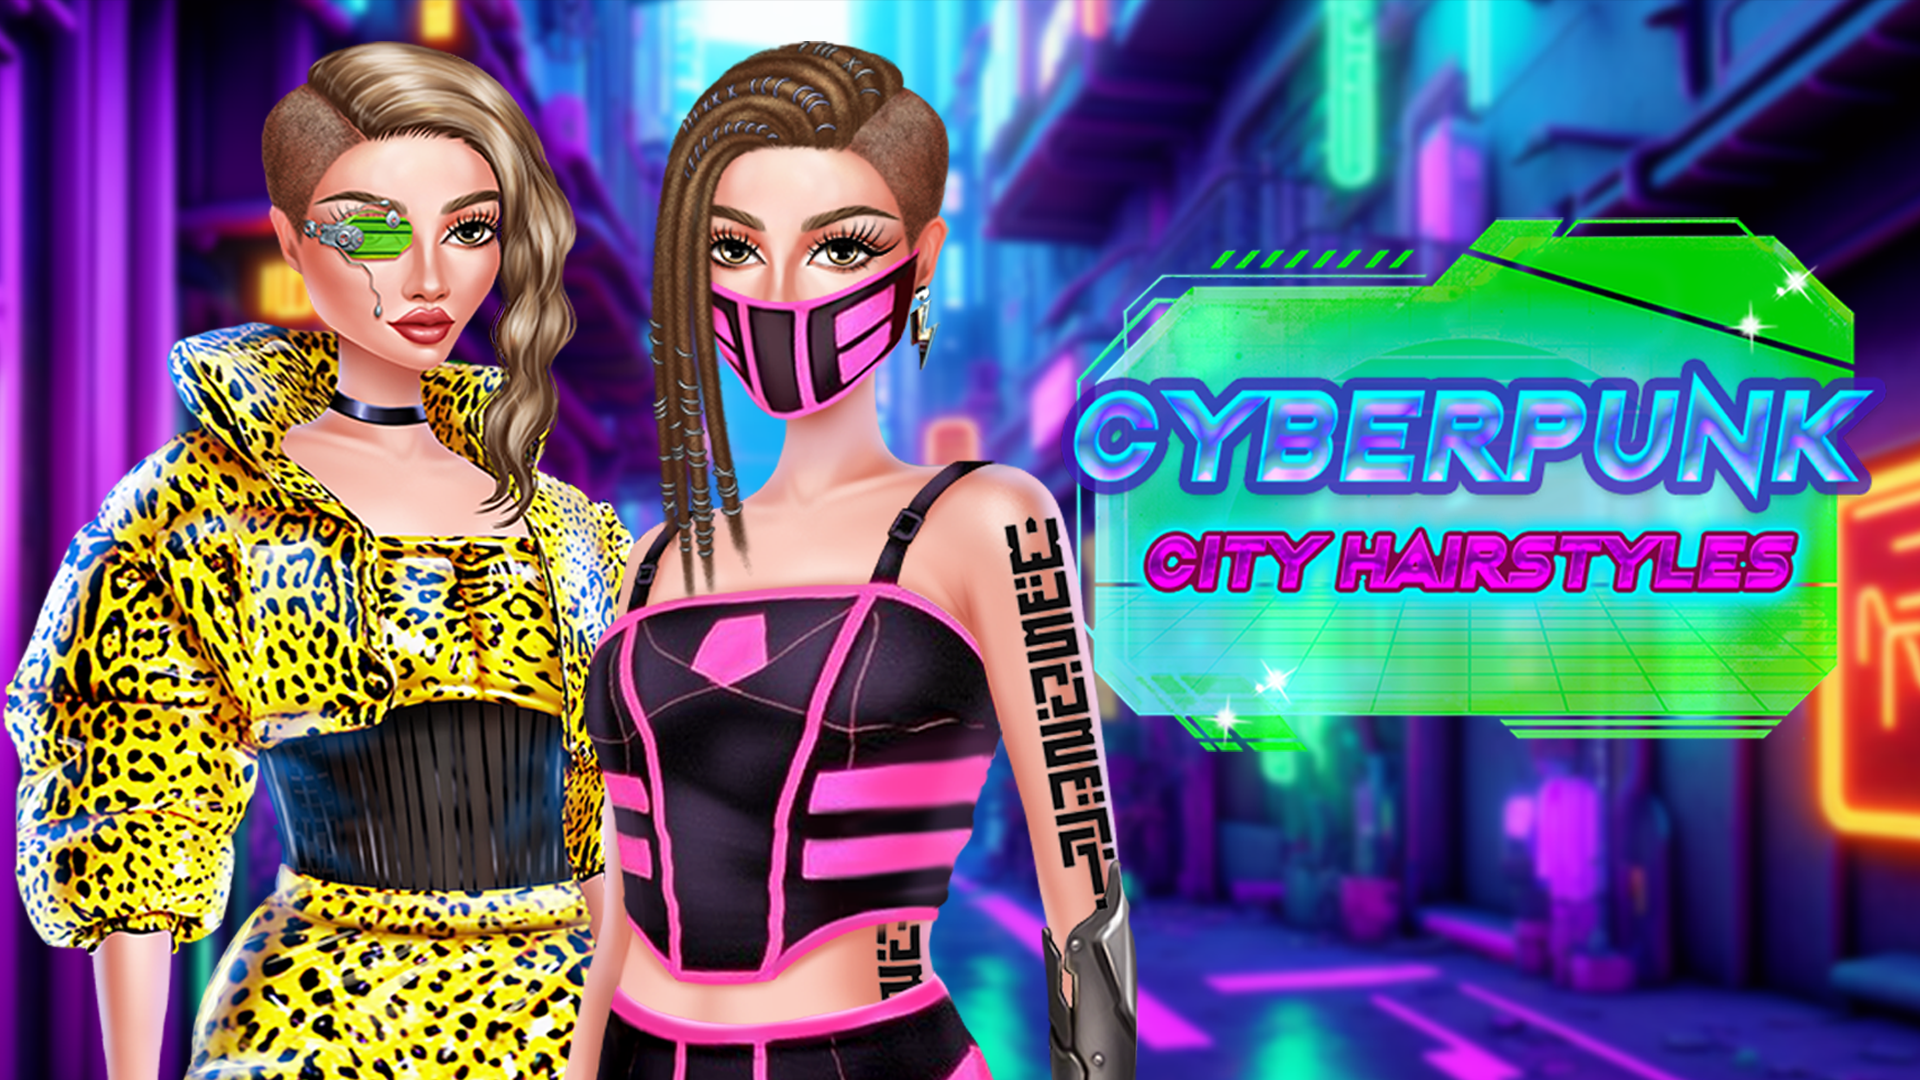 Cyberpunk City Hairstyles Game Image